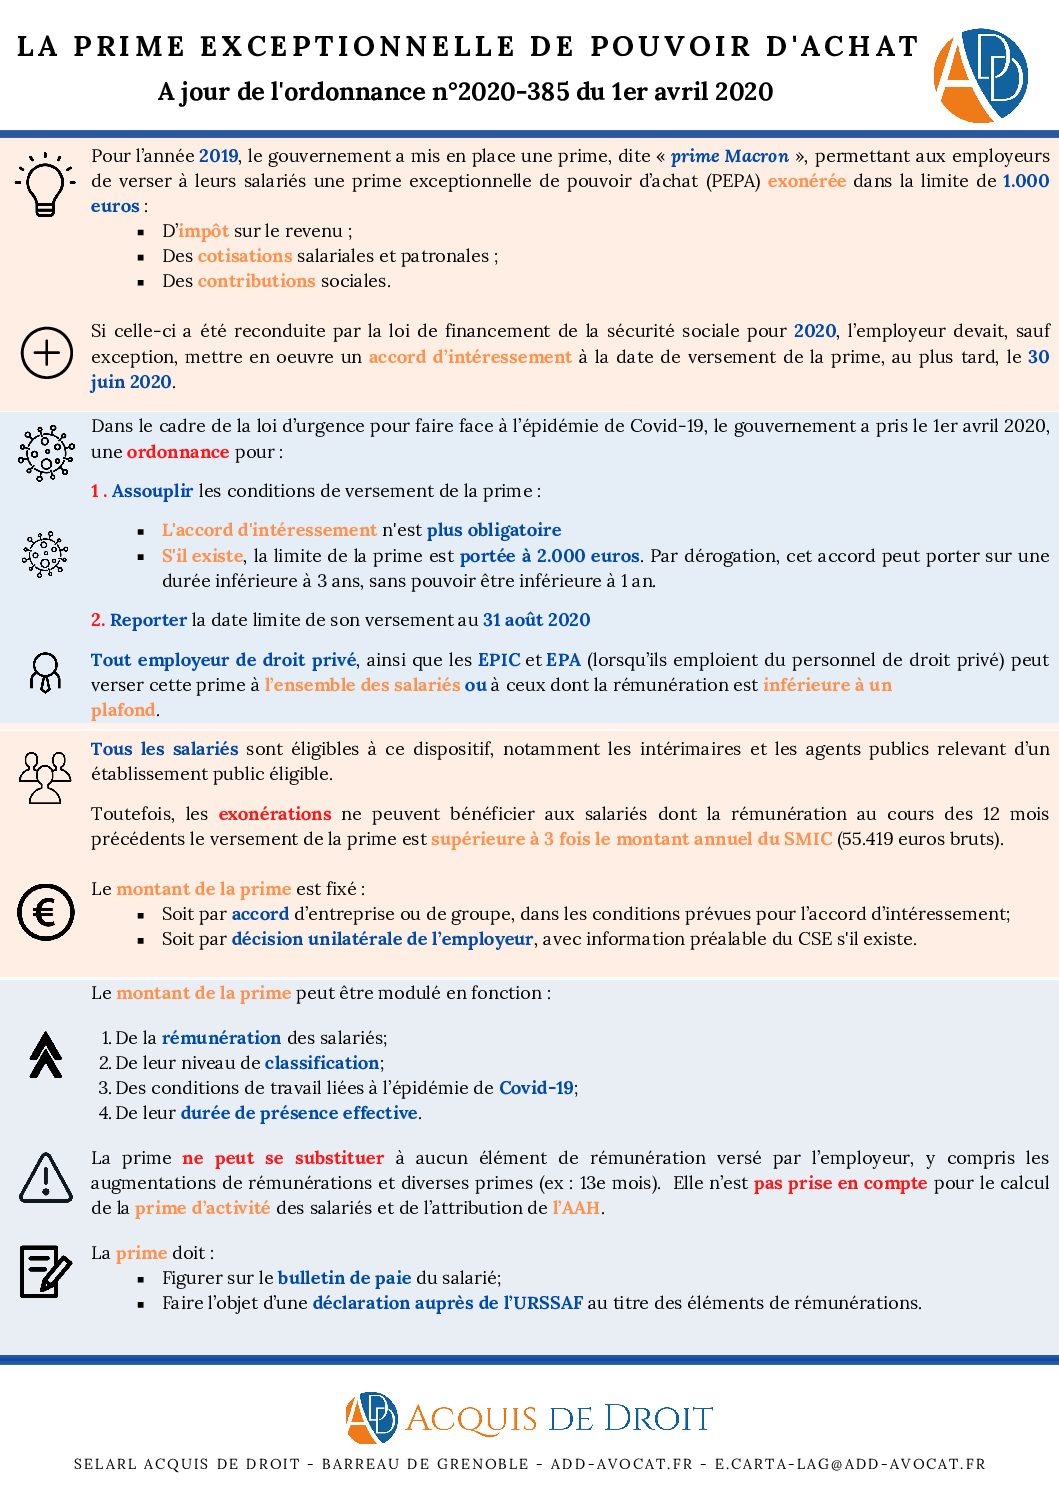 Coronavirus et ordonnance du 1er avril 2020 : la prime Macron (PEPA)